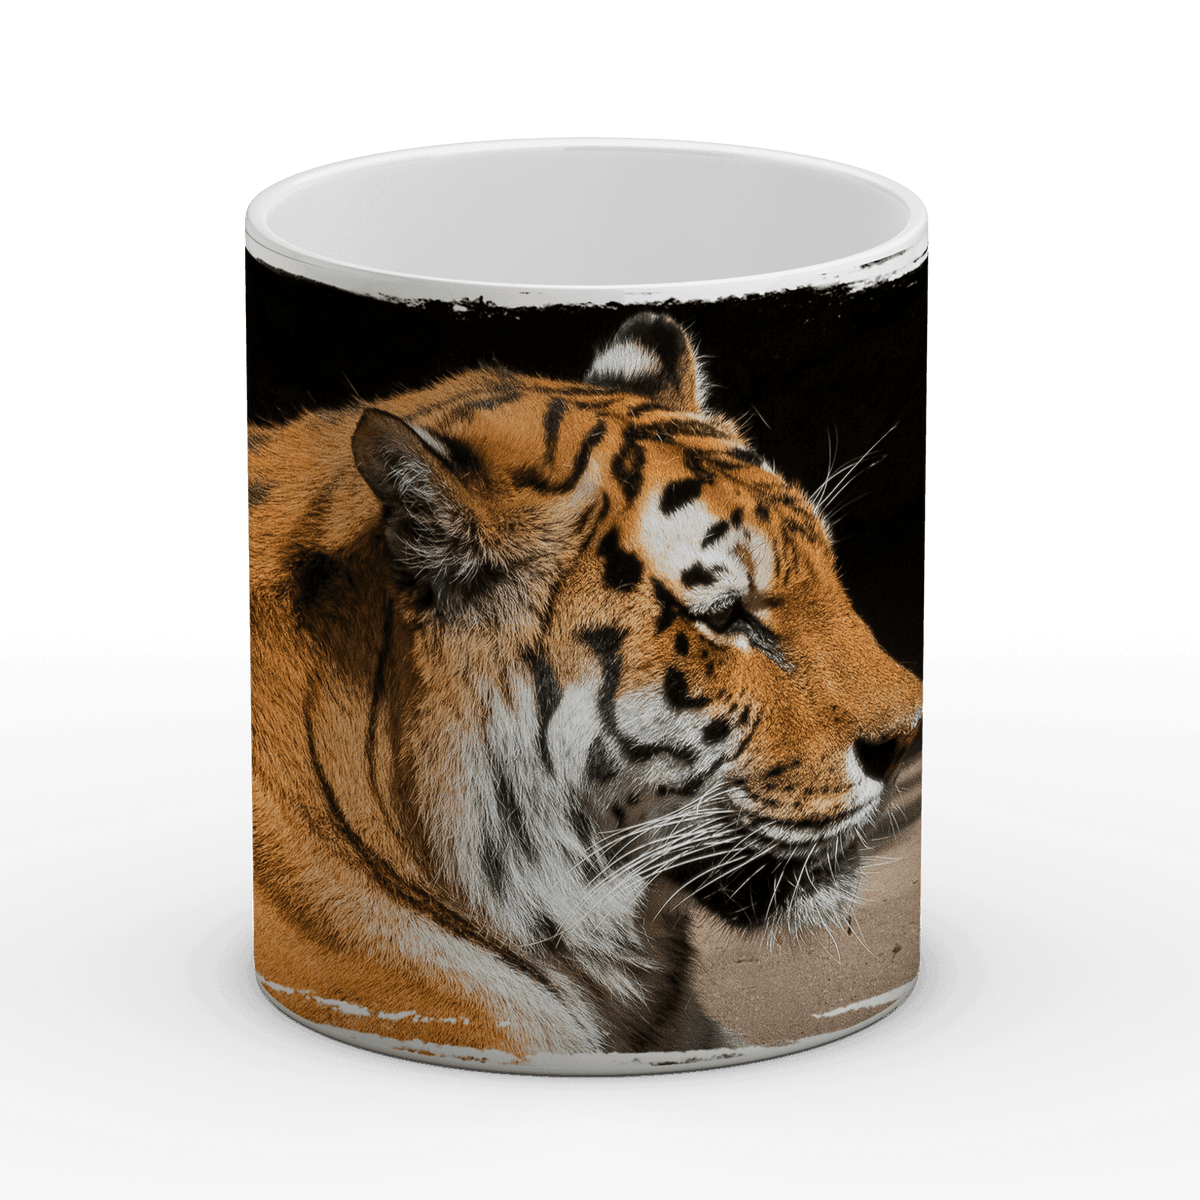 Tiger mit strahlendem Fell - Tasse, weiß - Howling Nature